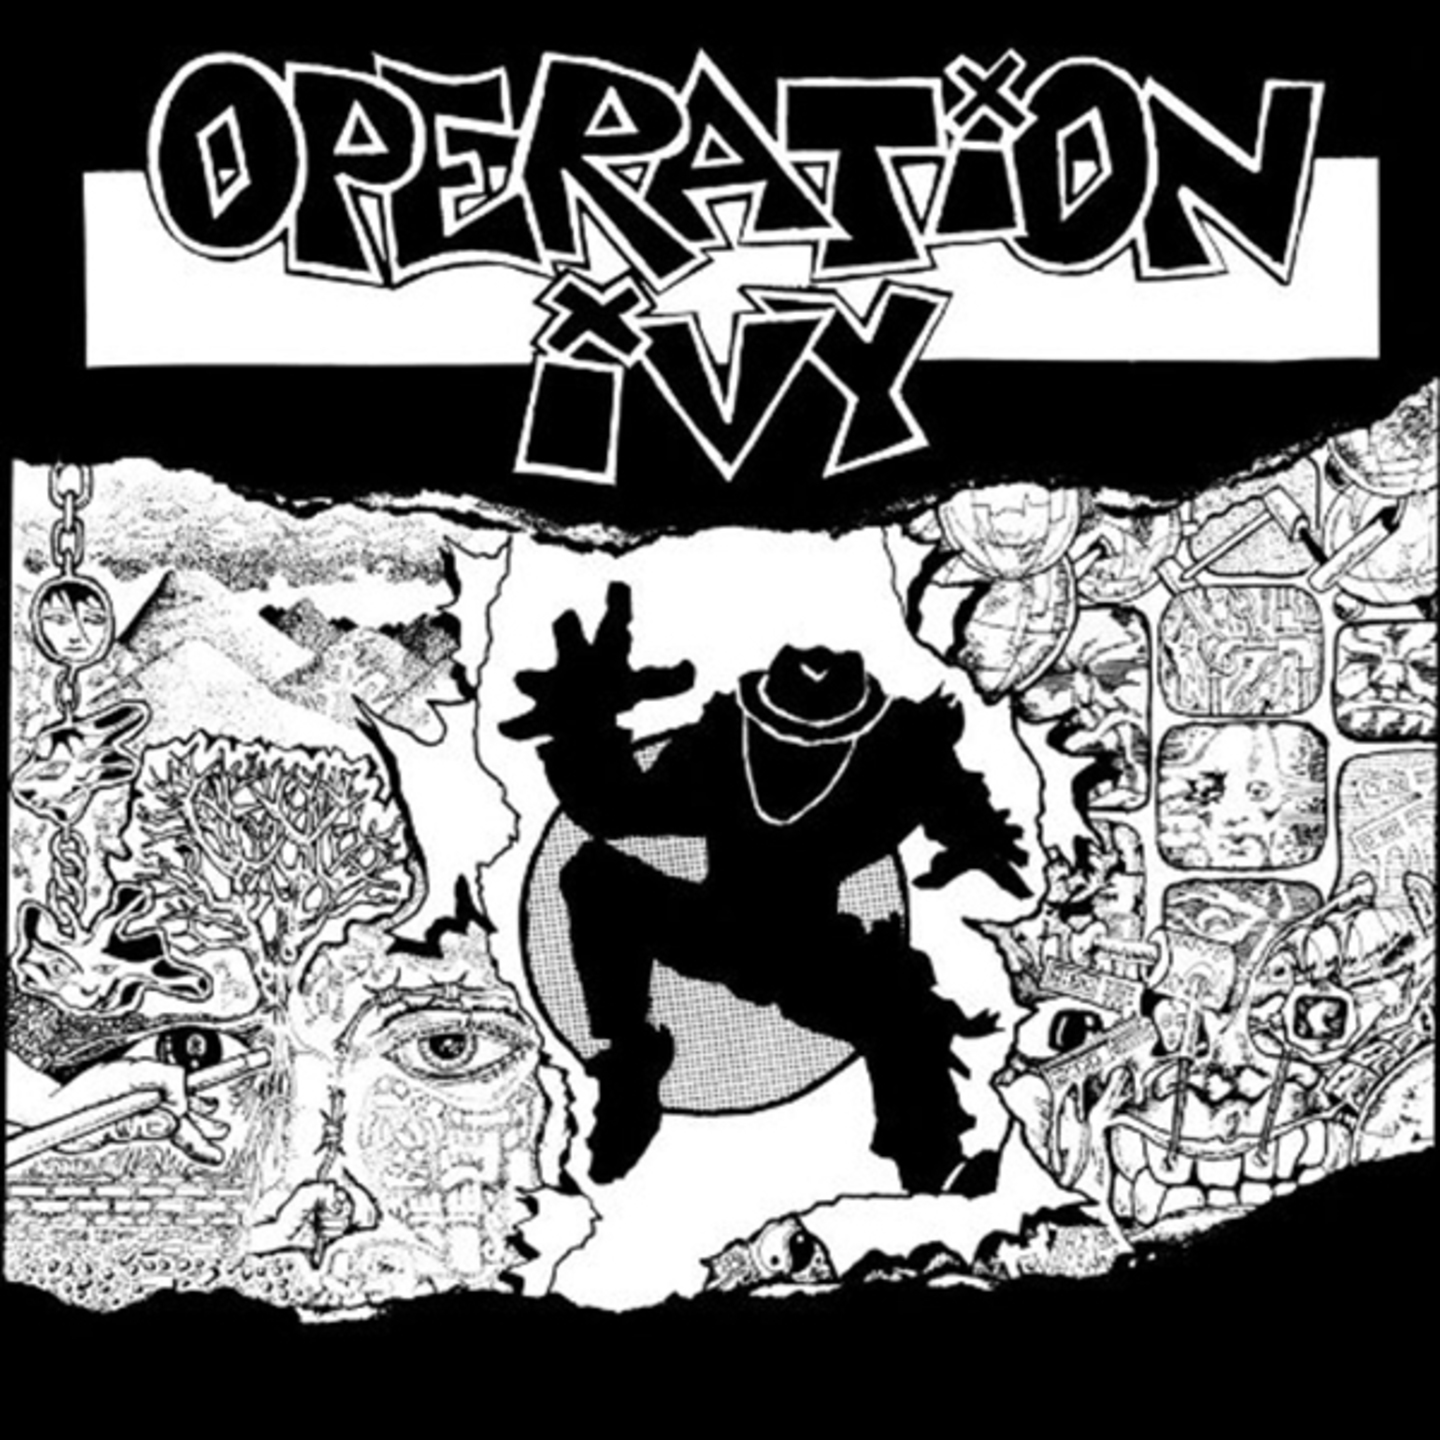 OPERATION IVY - Energy LP